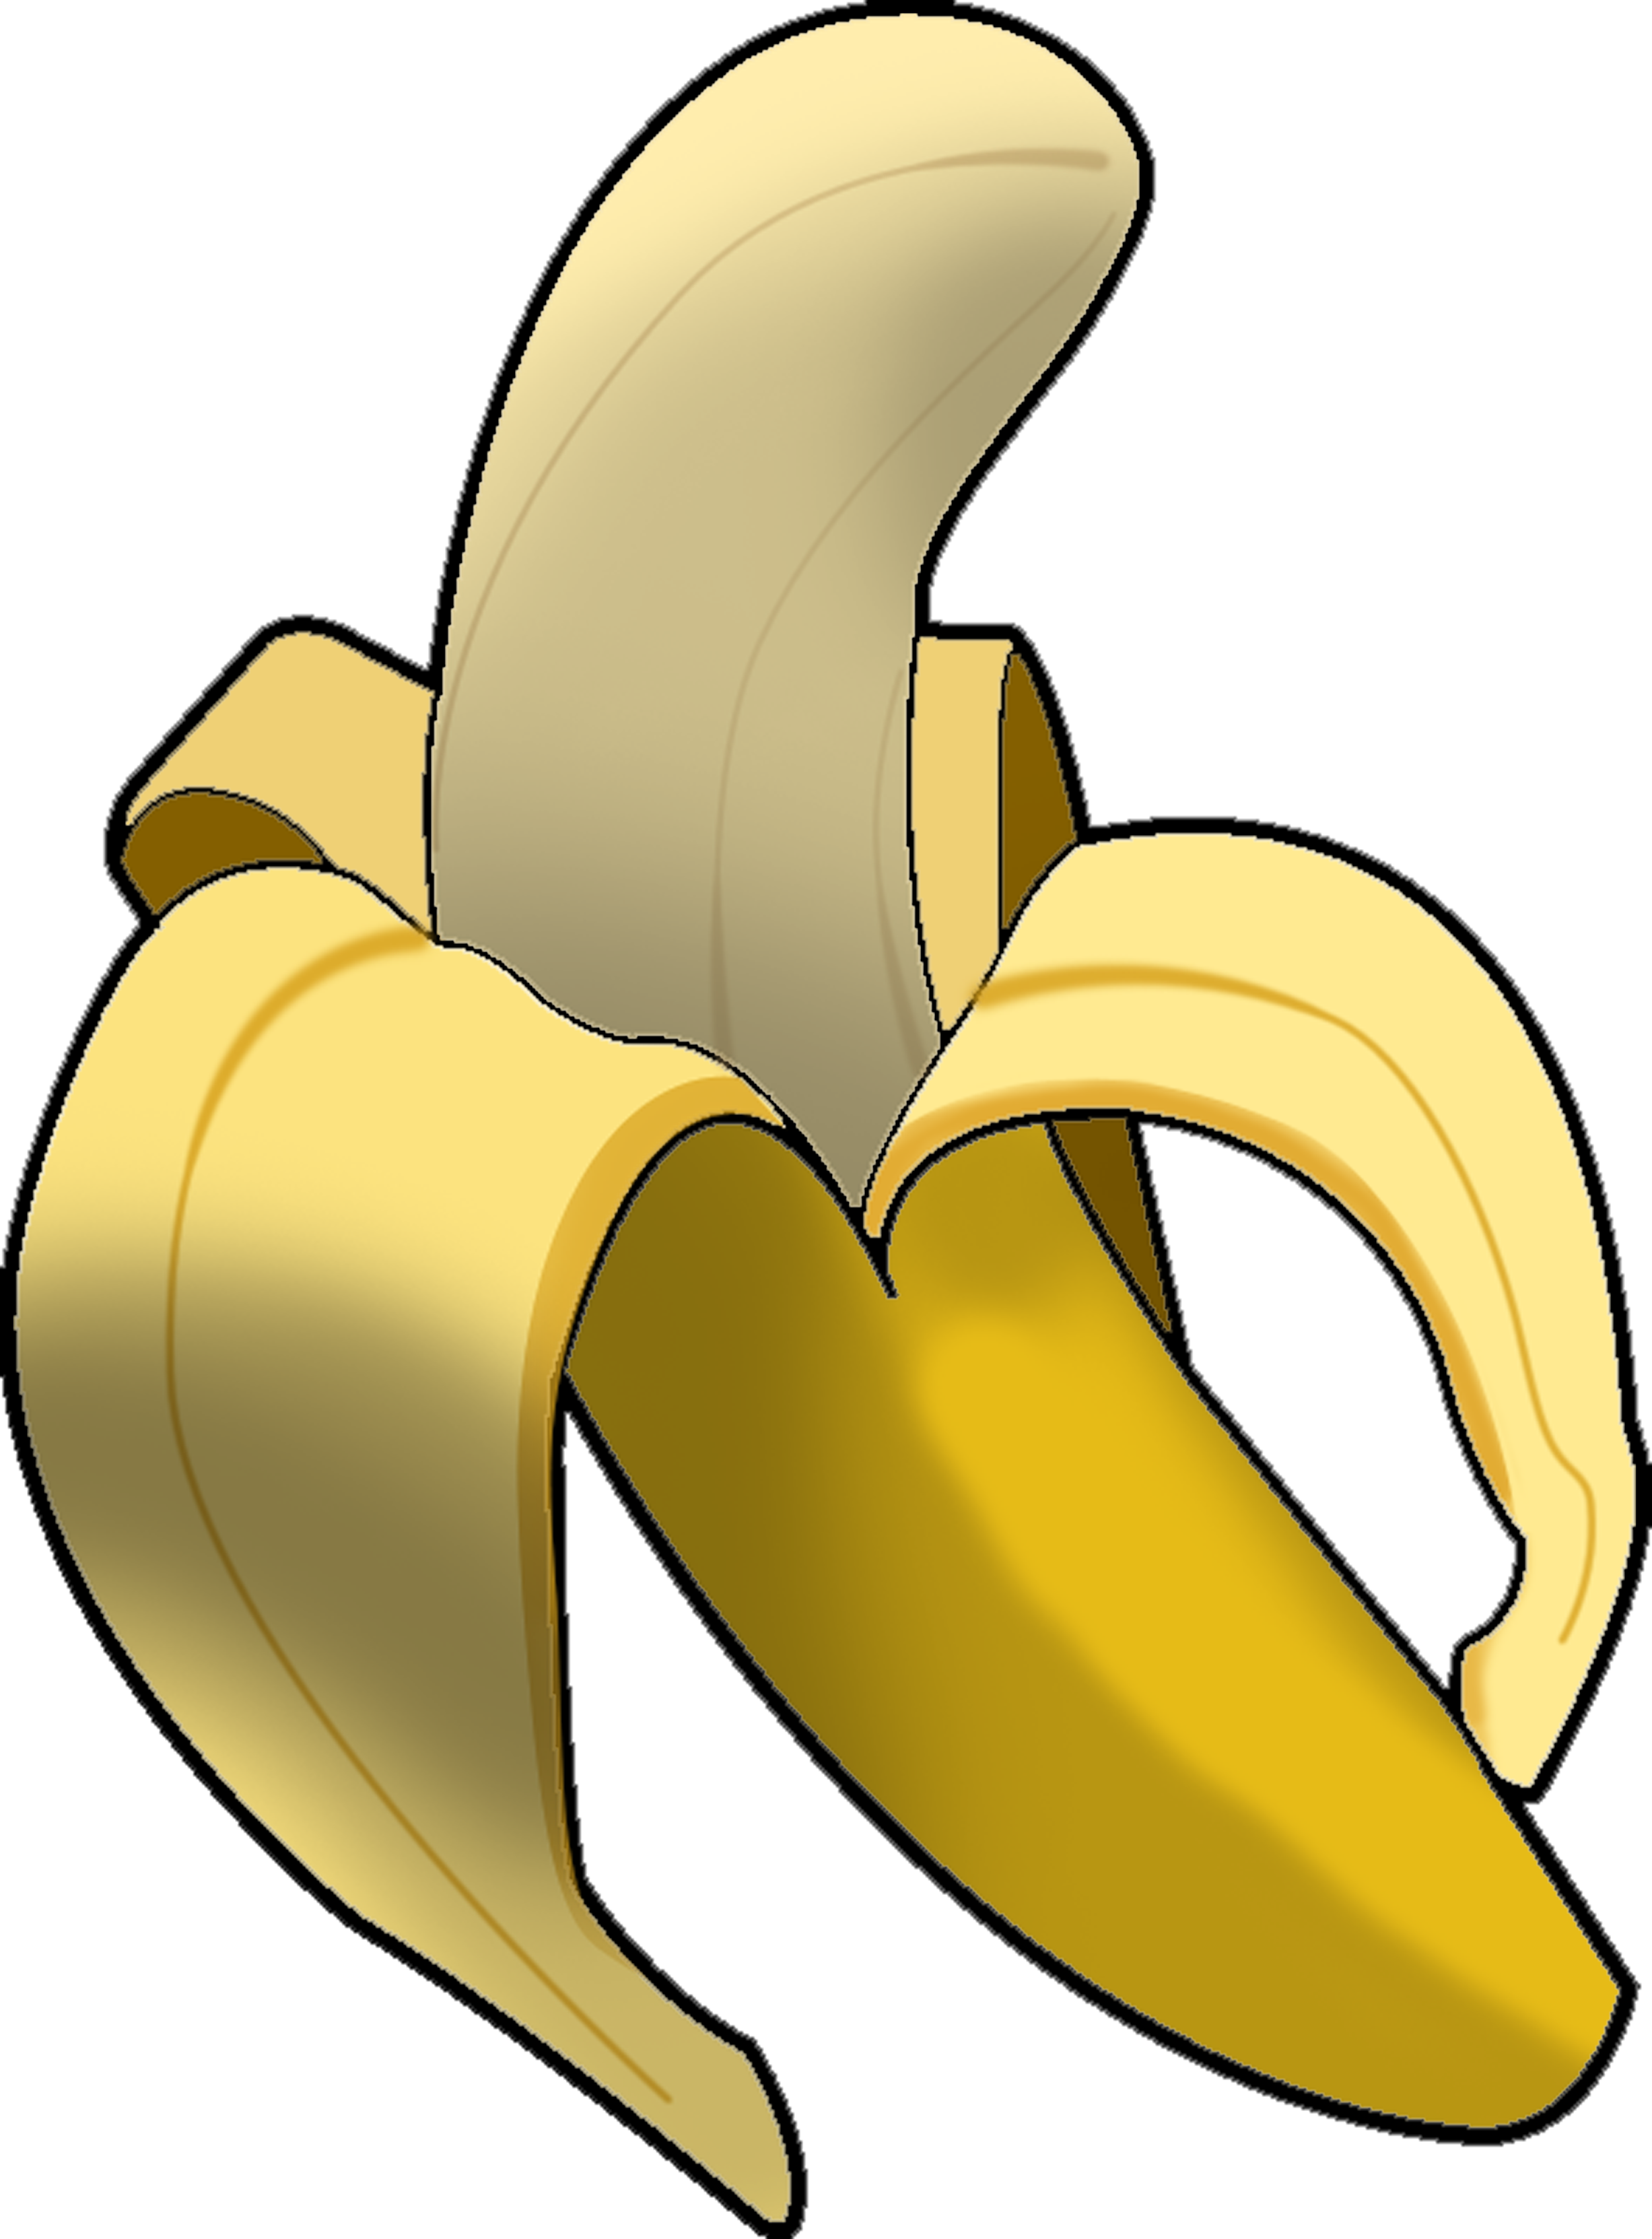 Plantain Banana Image - Banana Peeling Clip Art (2454x3325)